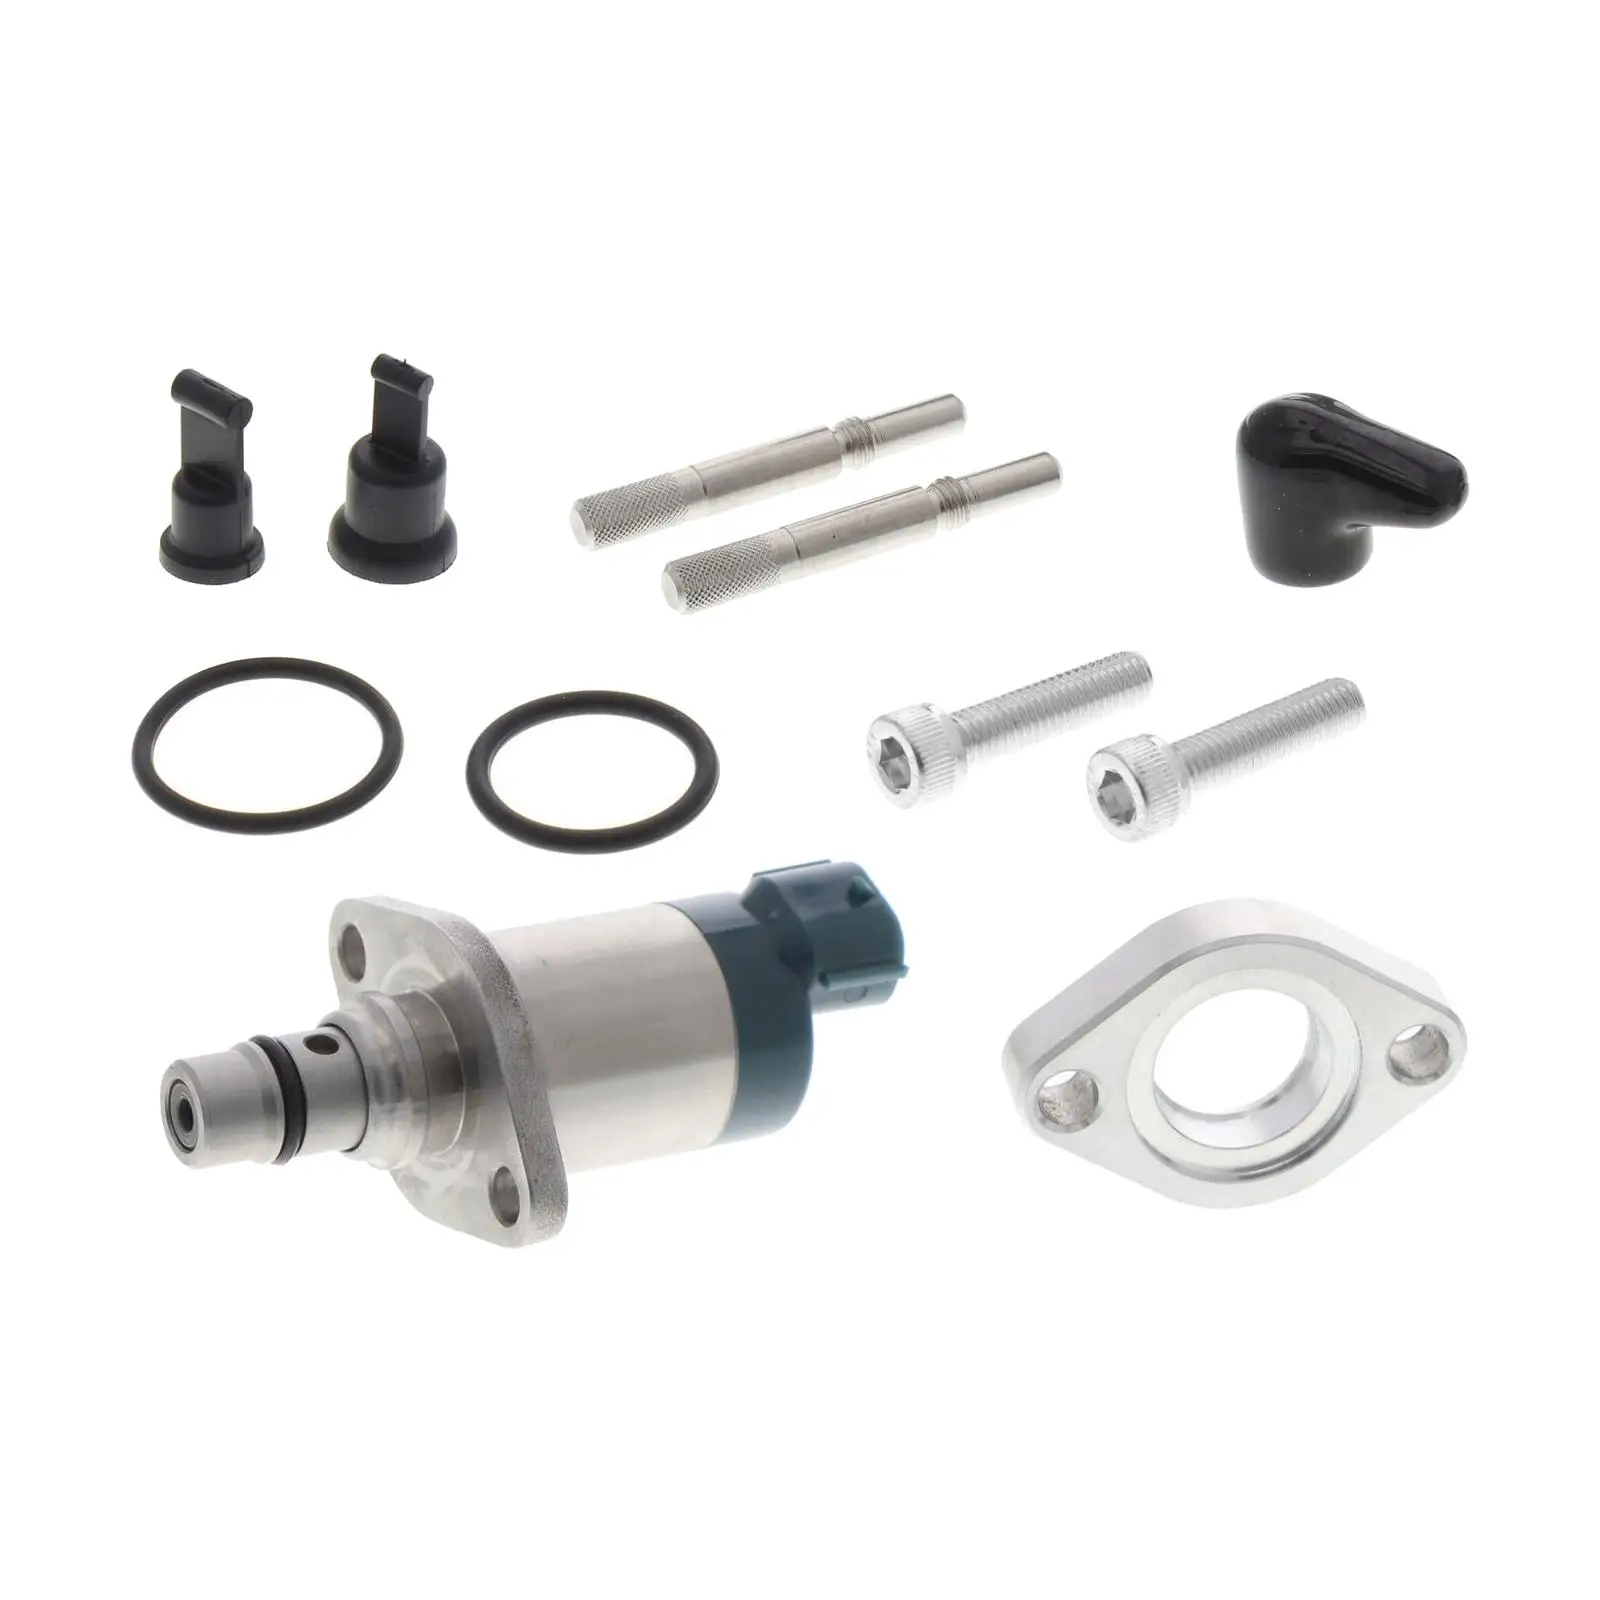 Car Fuel Pump Suction Control Valve A6860LC10B A38-11-0004 16860LC10A A6860-Lc10A for Mitsubishi L200 Replace Parts